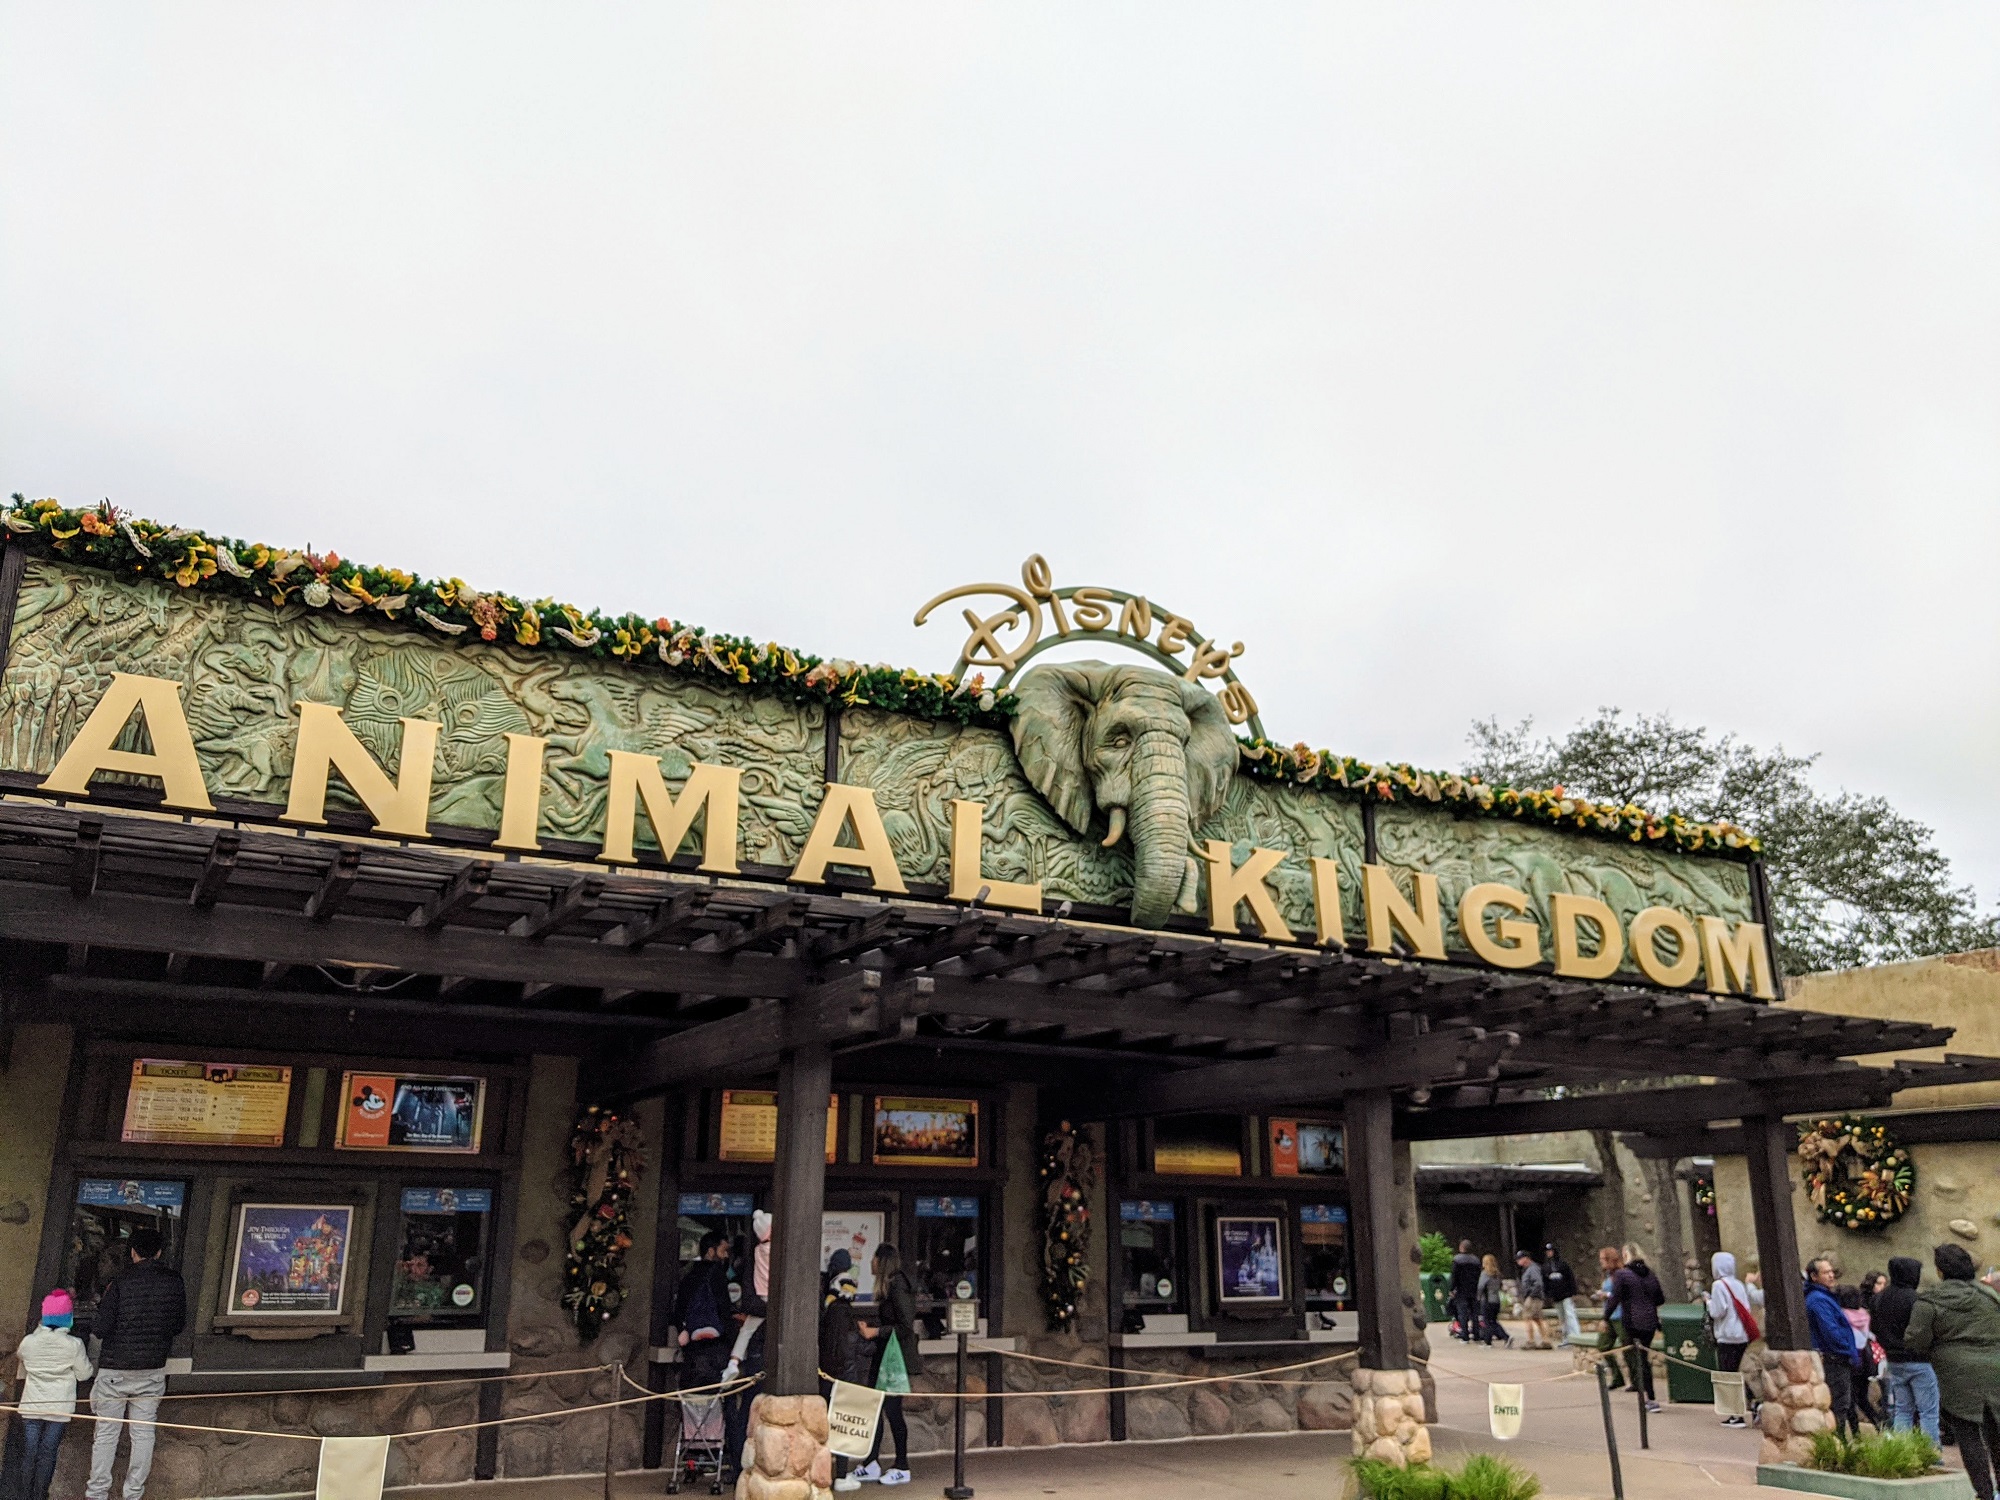 Lion king show return to Disney!